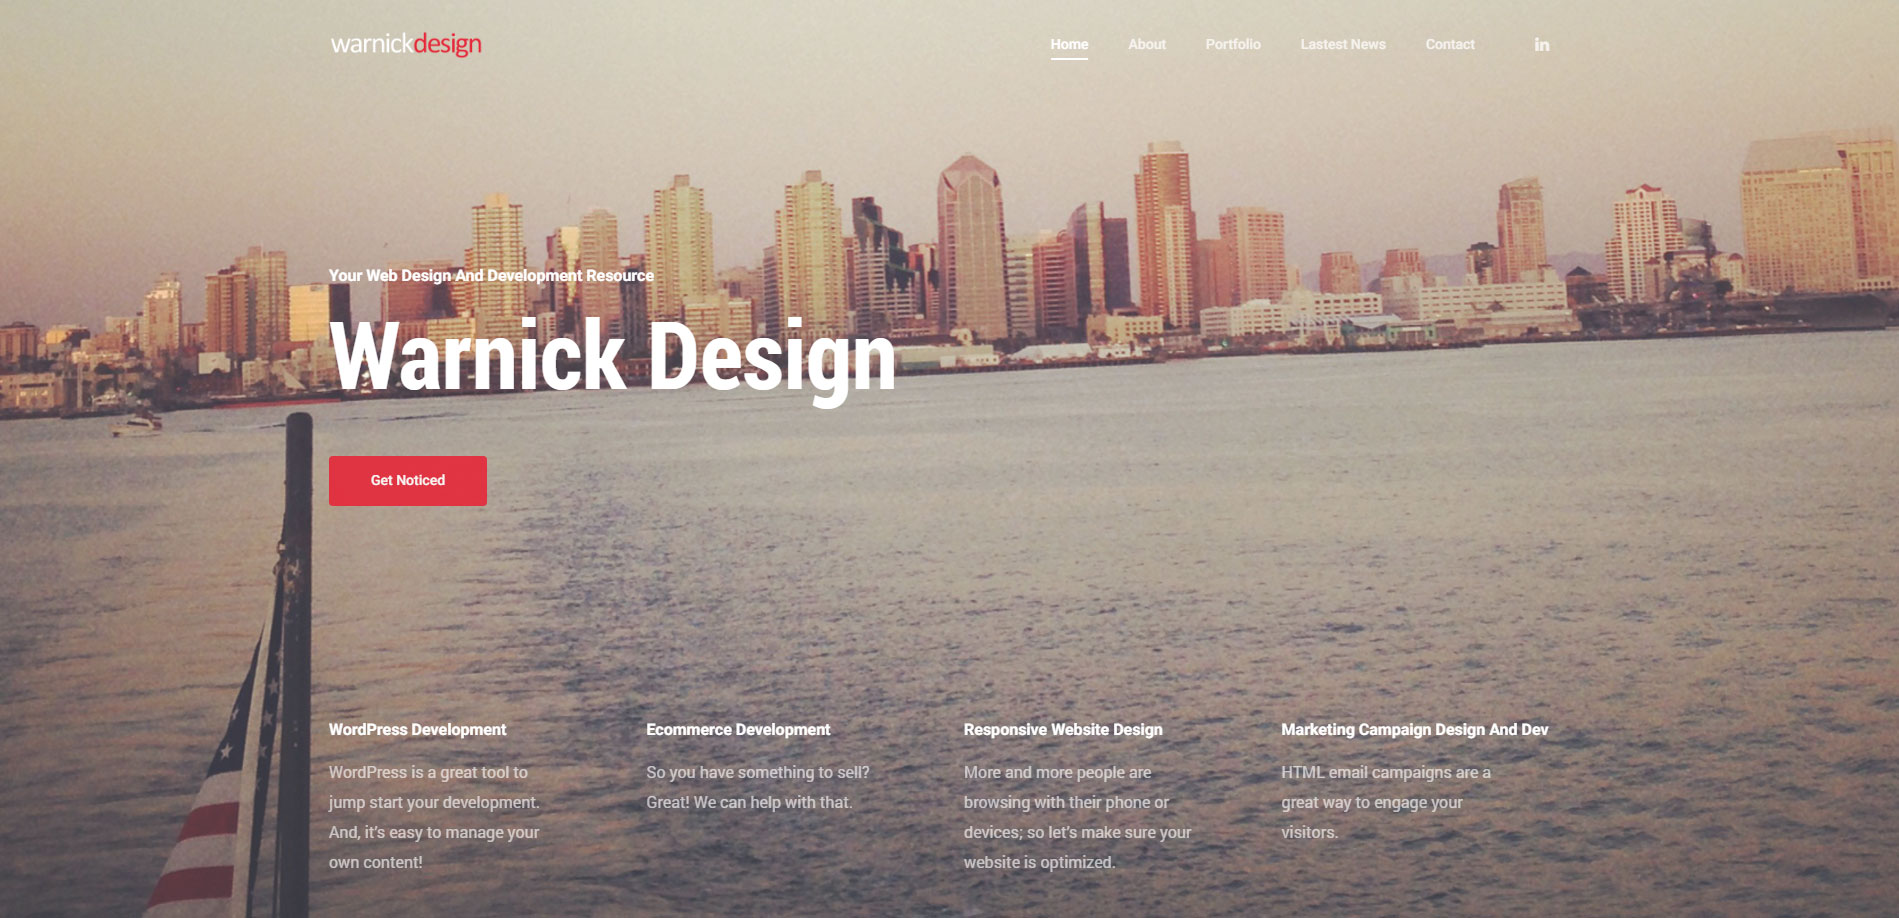 Warnick Design Launches New Website